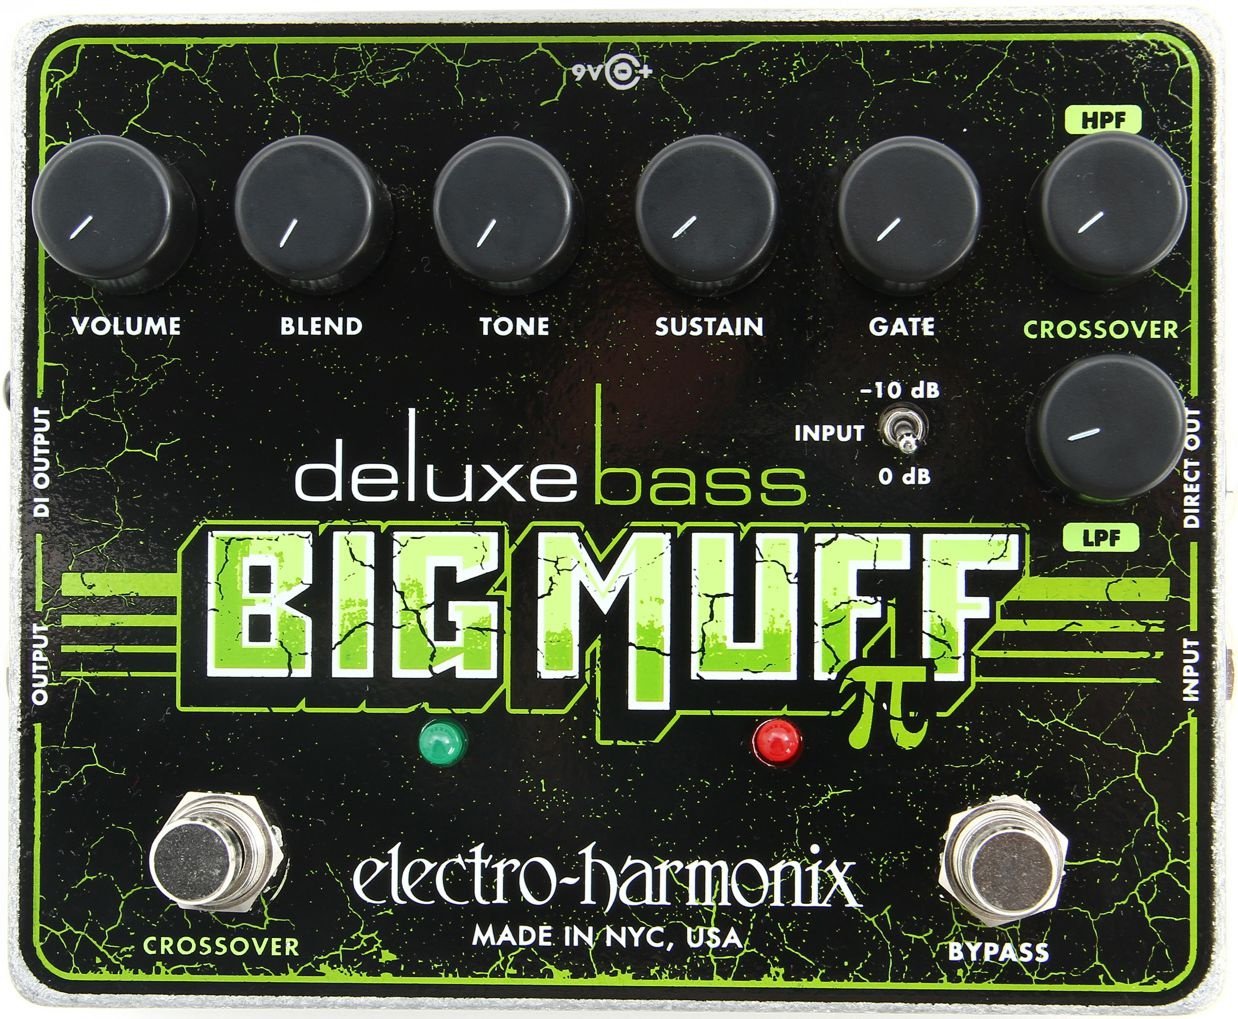 Electro-Harmonix Deluxe Bass Big Muff Pi - Pedal on ModularGrid